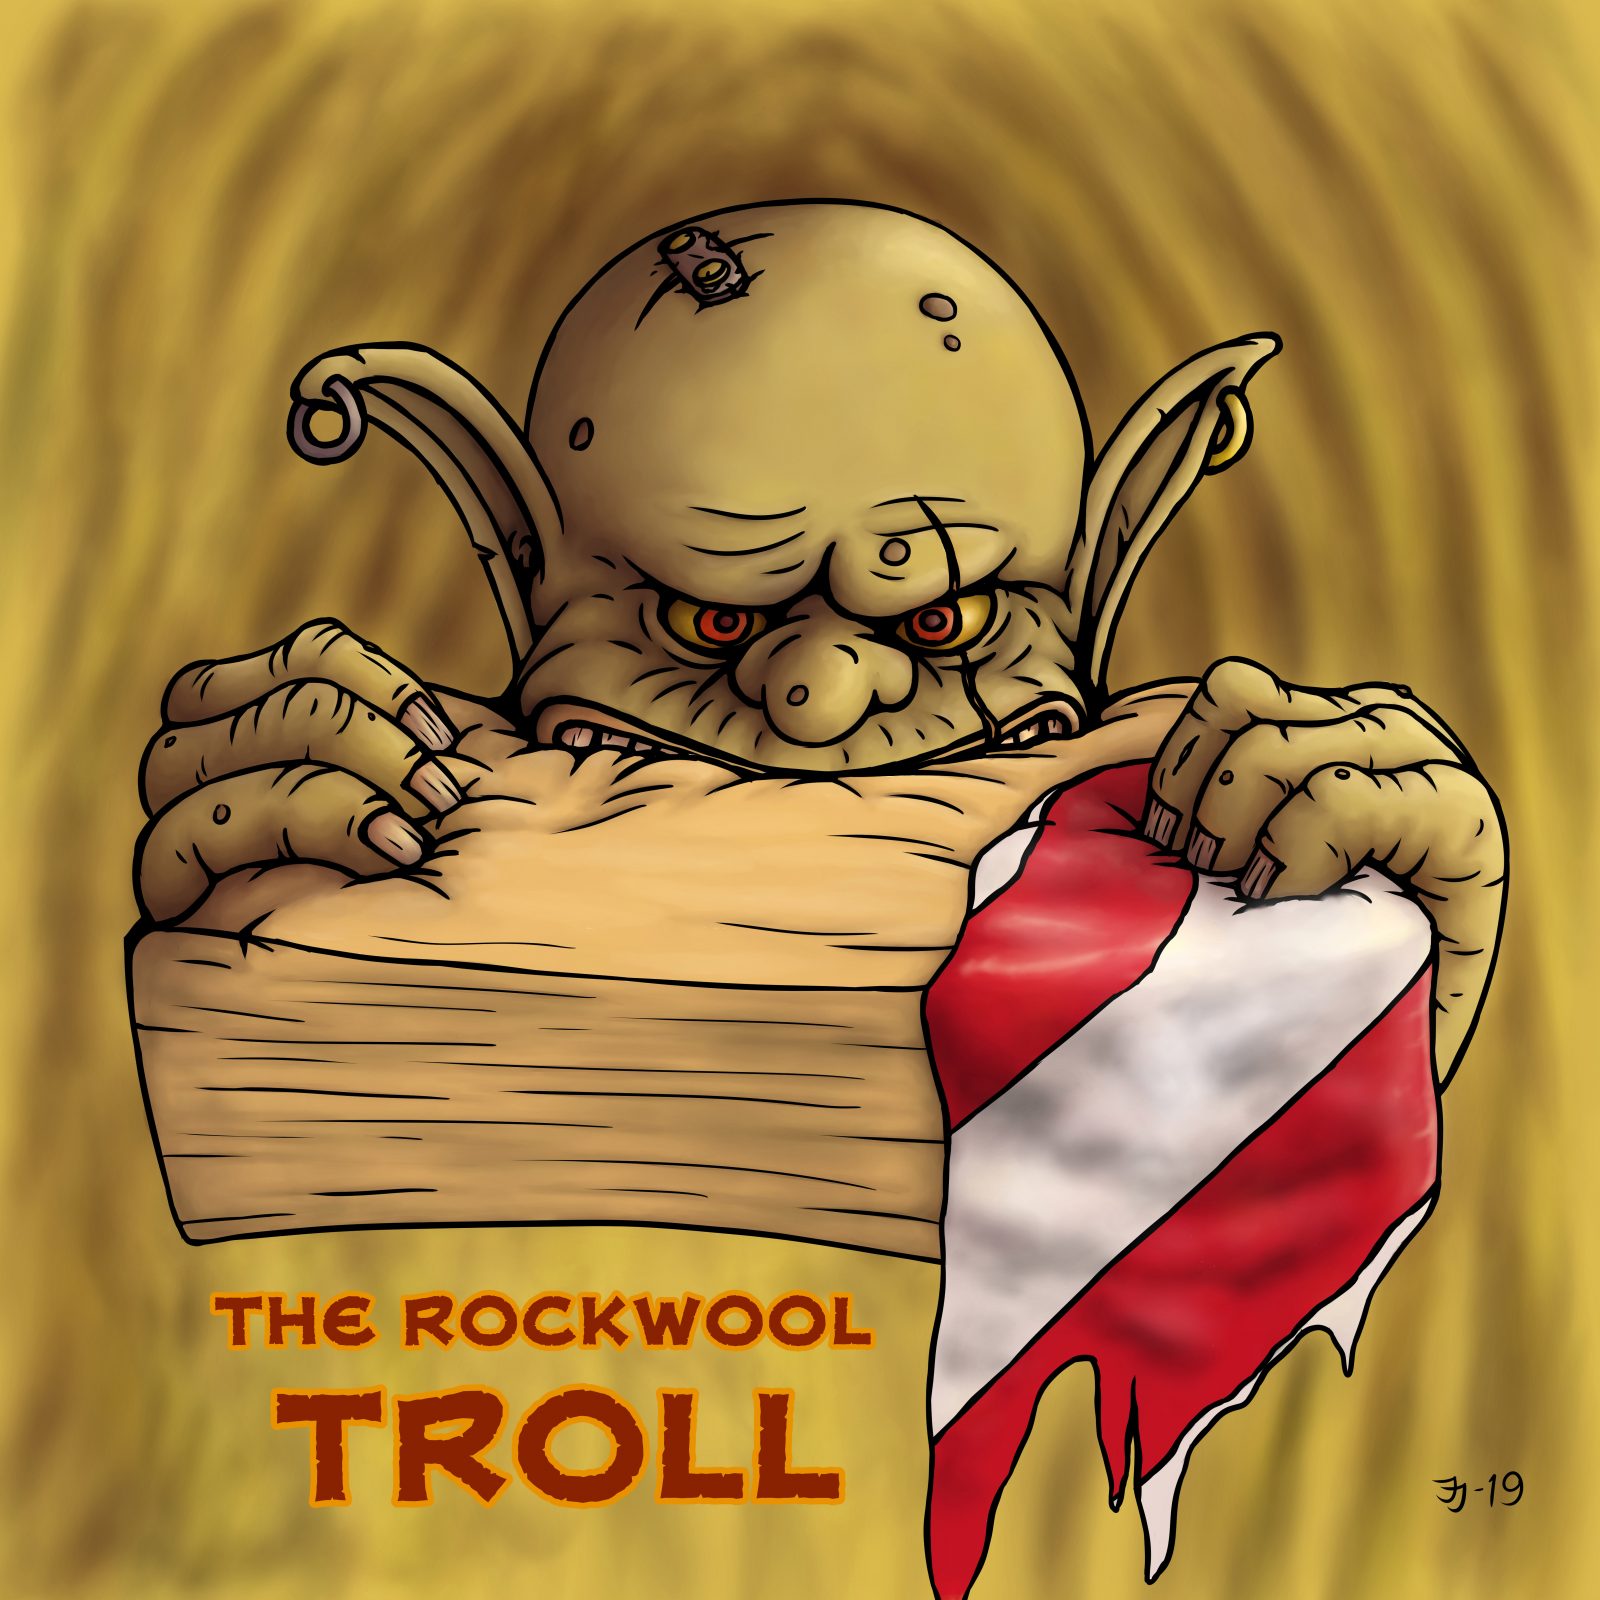 "The Rockwool Troll" by Joakim Järnström